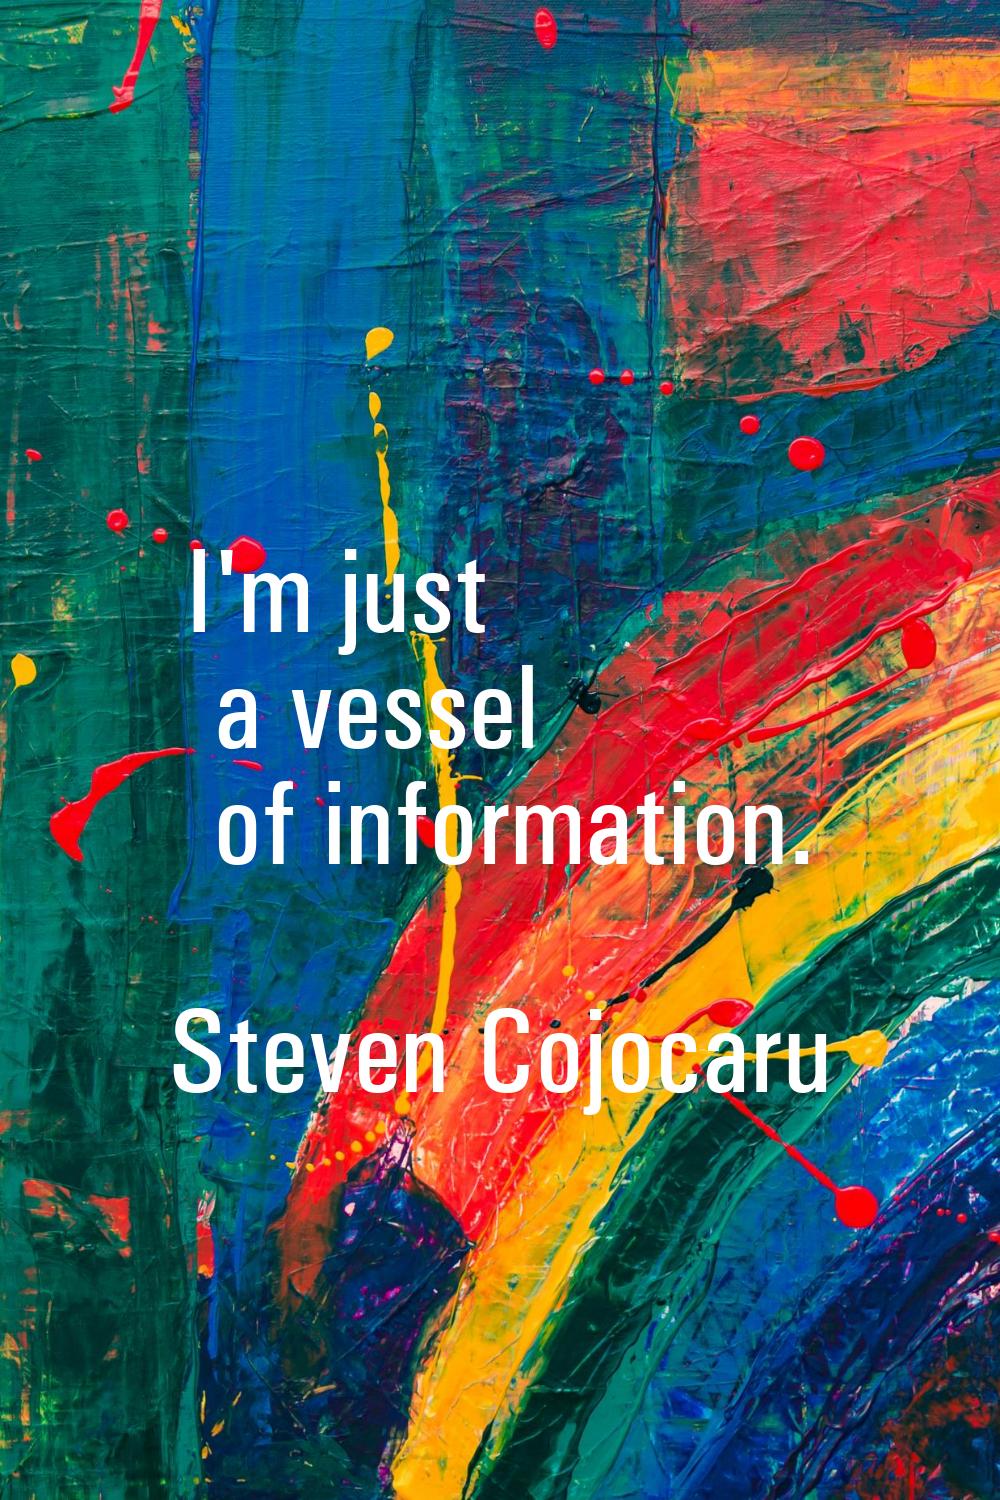 I'm just a vessel of information.